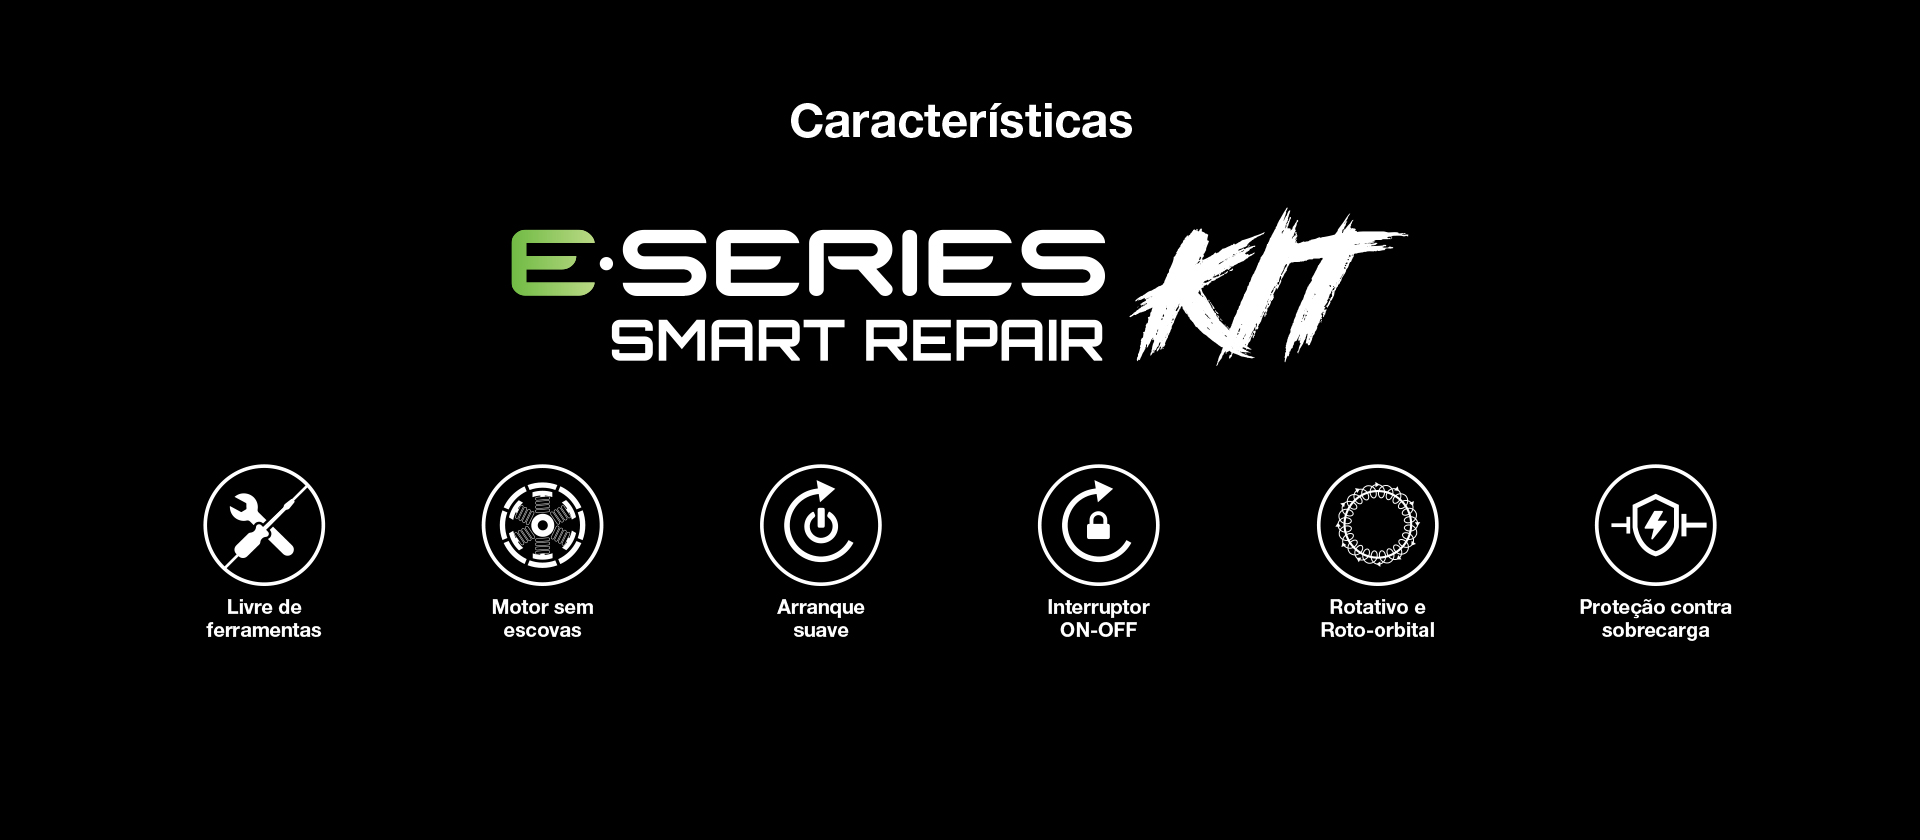 E-Series PRO X Smart Repair Kit Características e benefícios